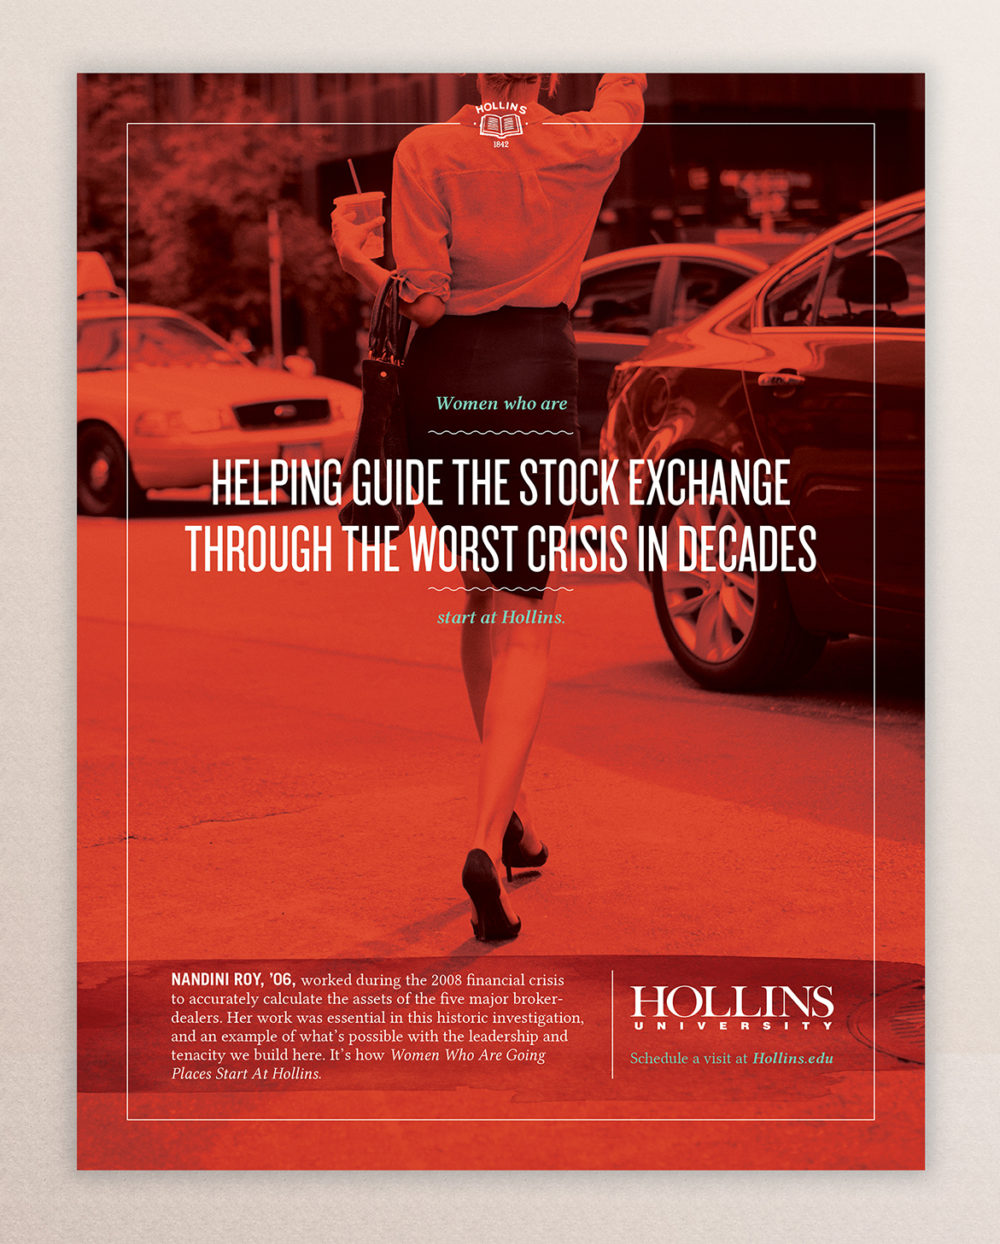 Hollins Print Ads – 1